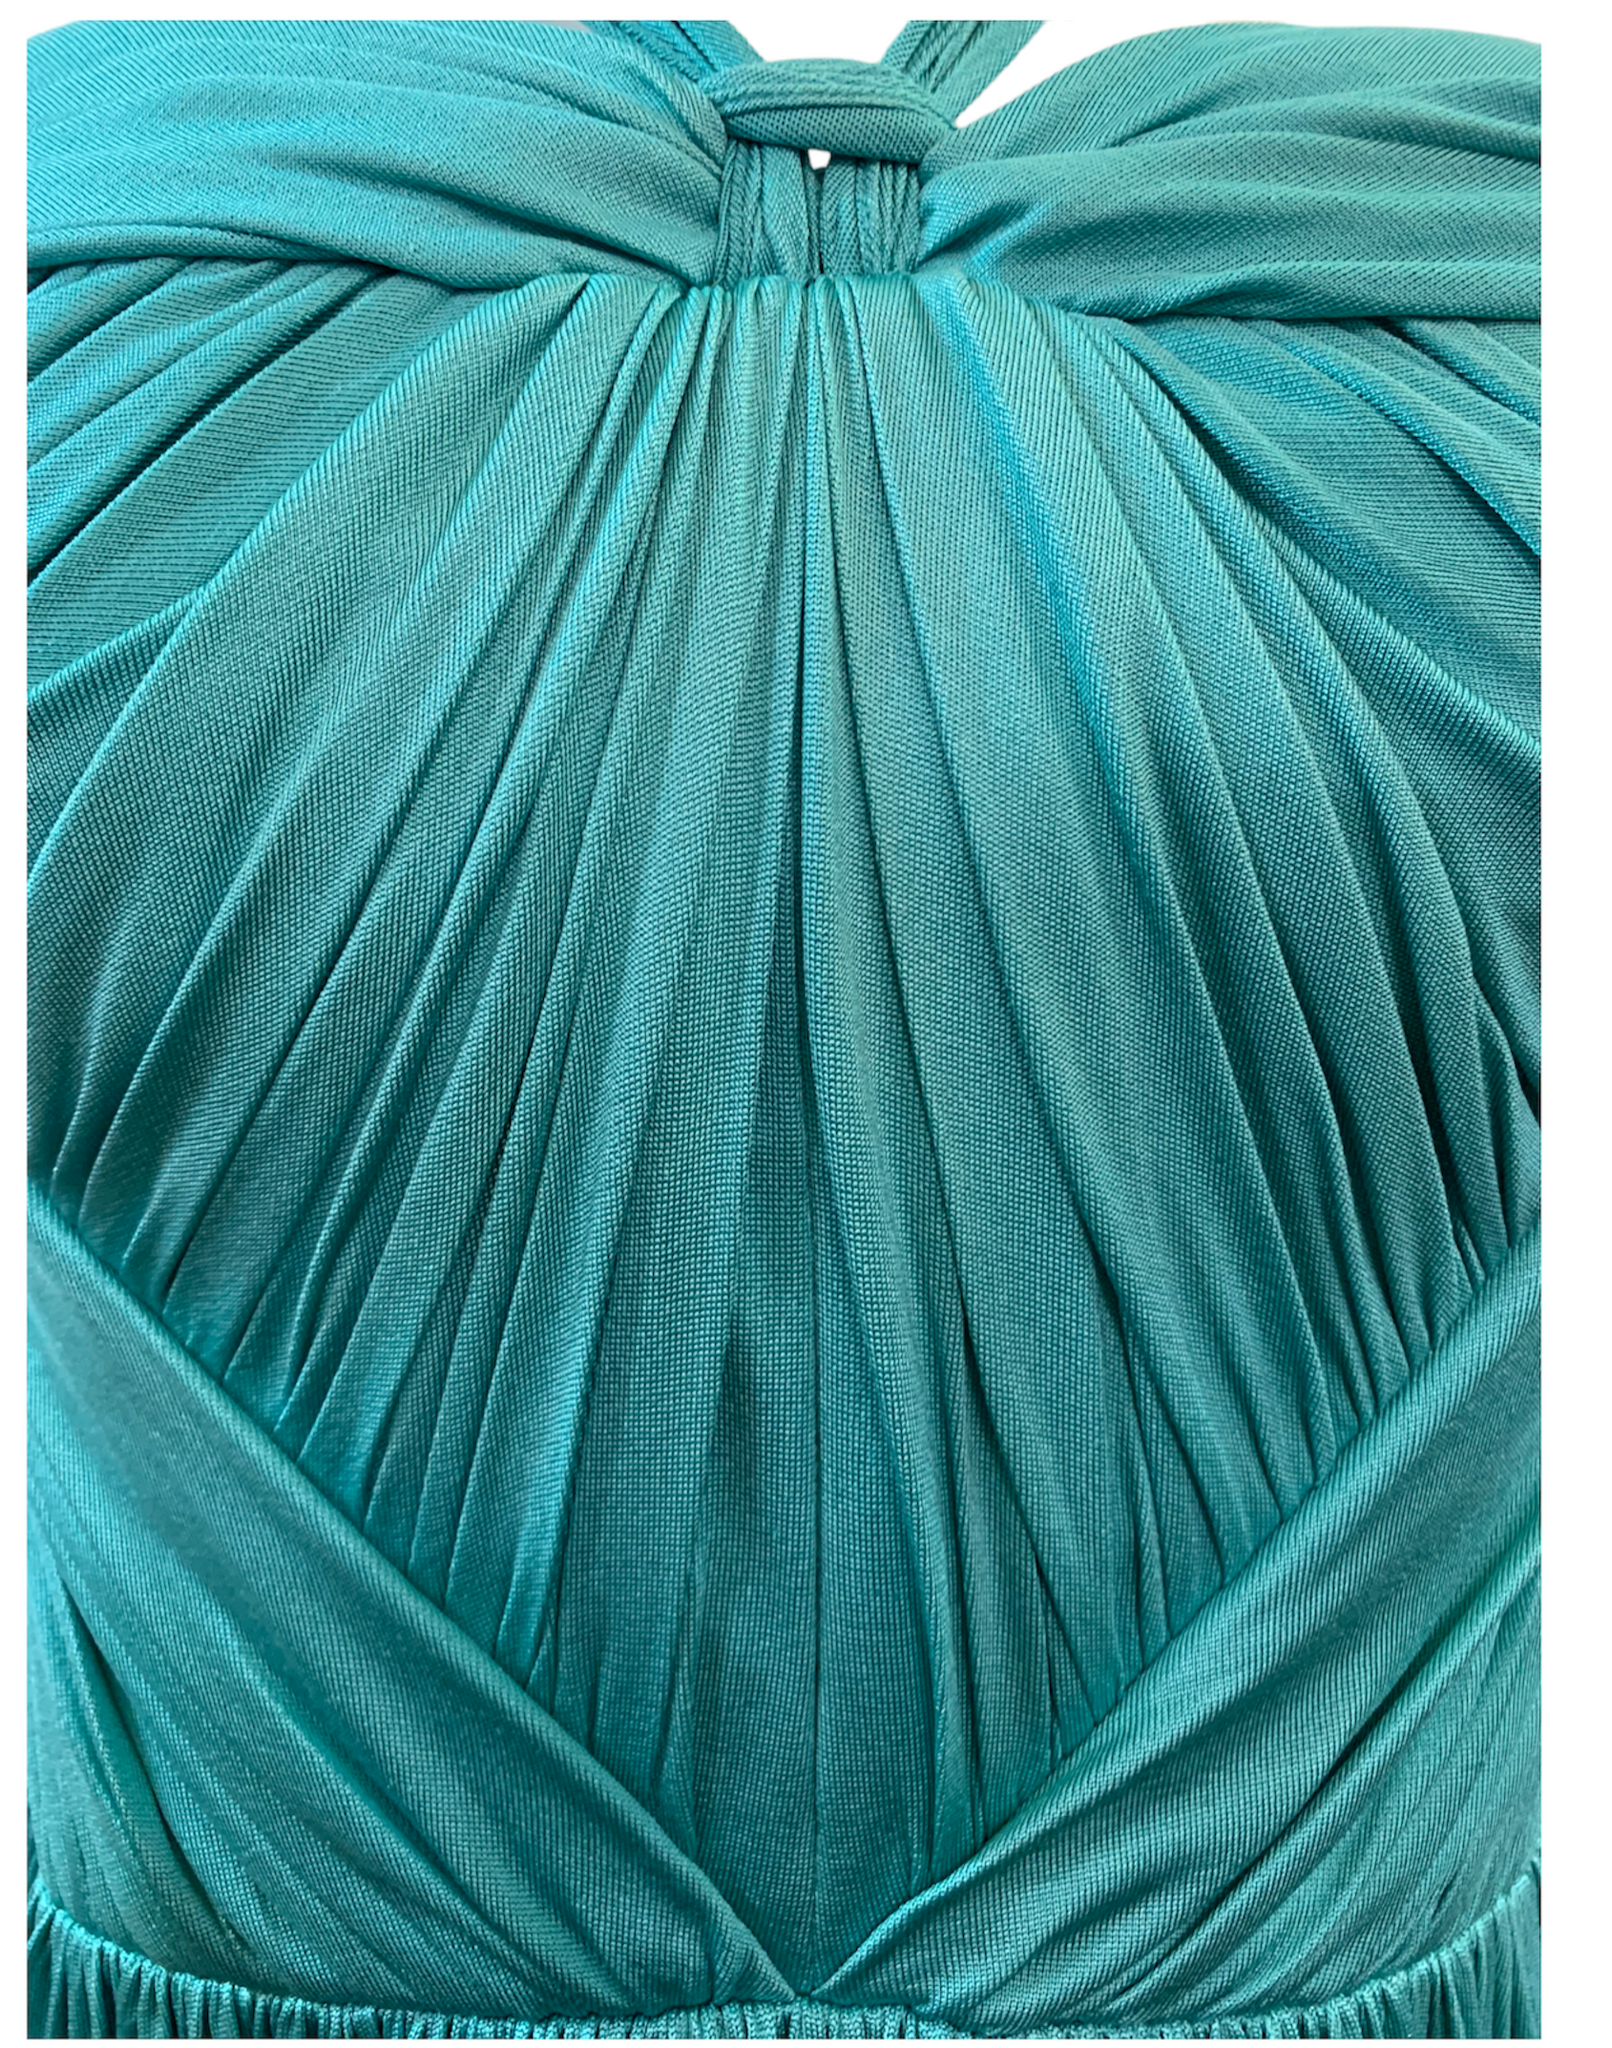 John Galliano for Dior Aqua Silk Jersey Cocktail Dress  DETAIL 5 of 6